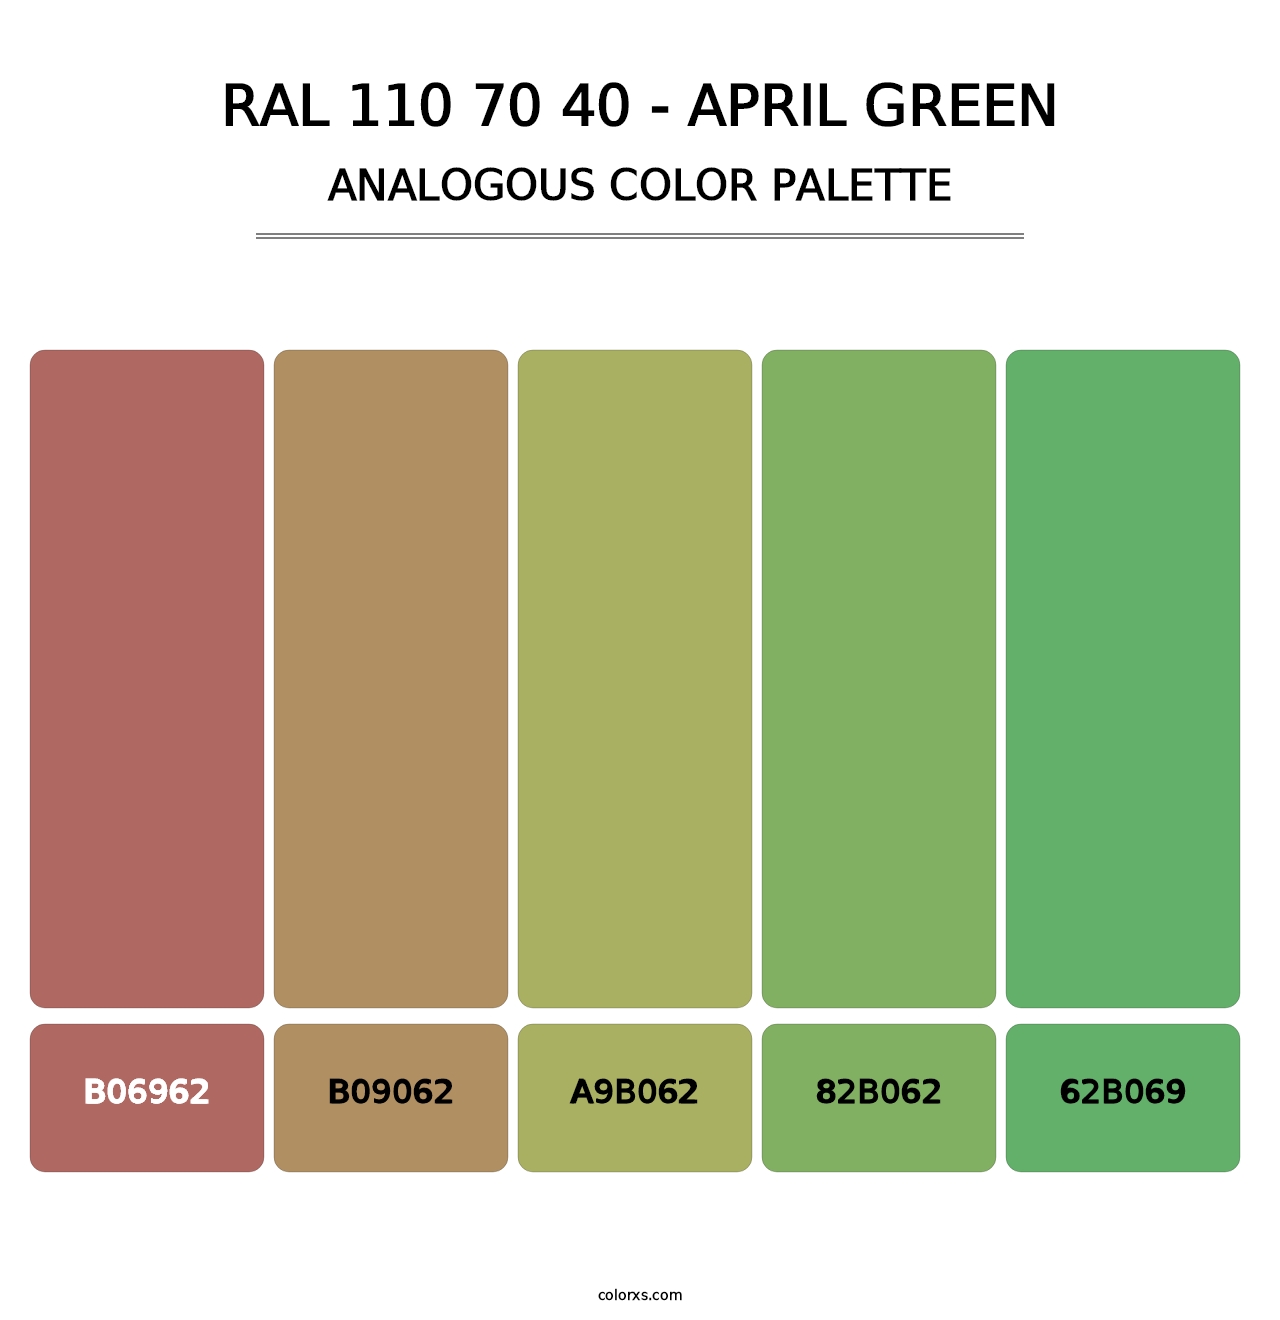 RAL 110 70 40 - April Green - Analogous Color Palette